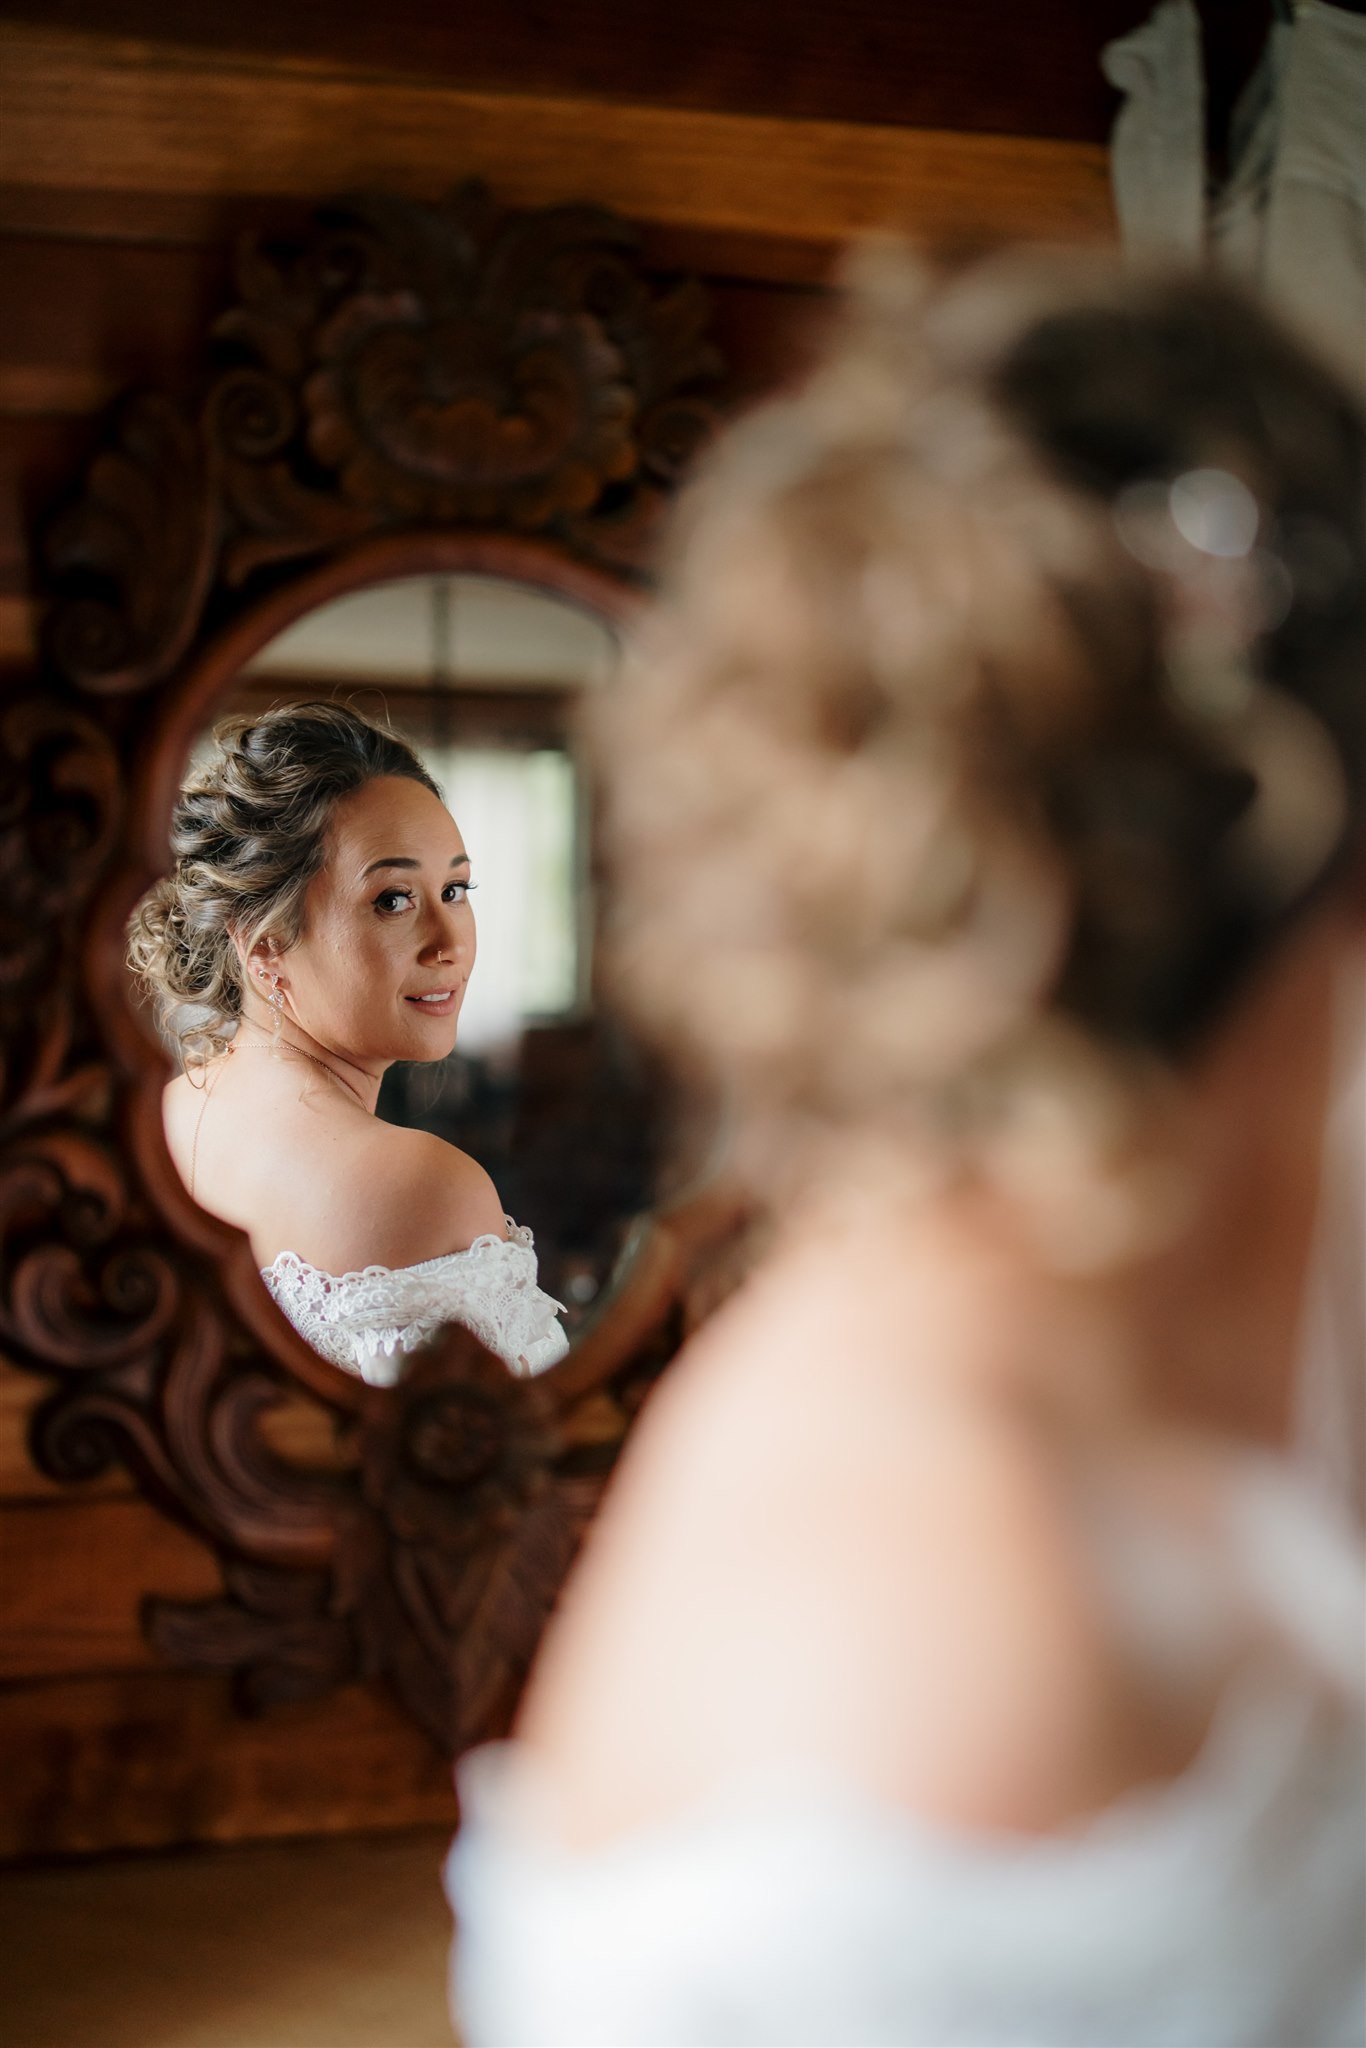 Matamata wedding venue | Hobbiton Tour | Auckland Wedding Photographer | Best Videographer | Top Videography | Getting Ready Photos | The Green Dragon Inn | Dear White Productions